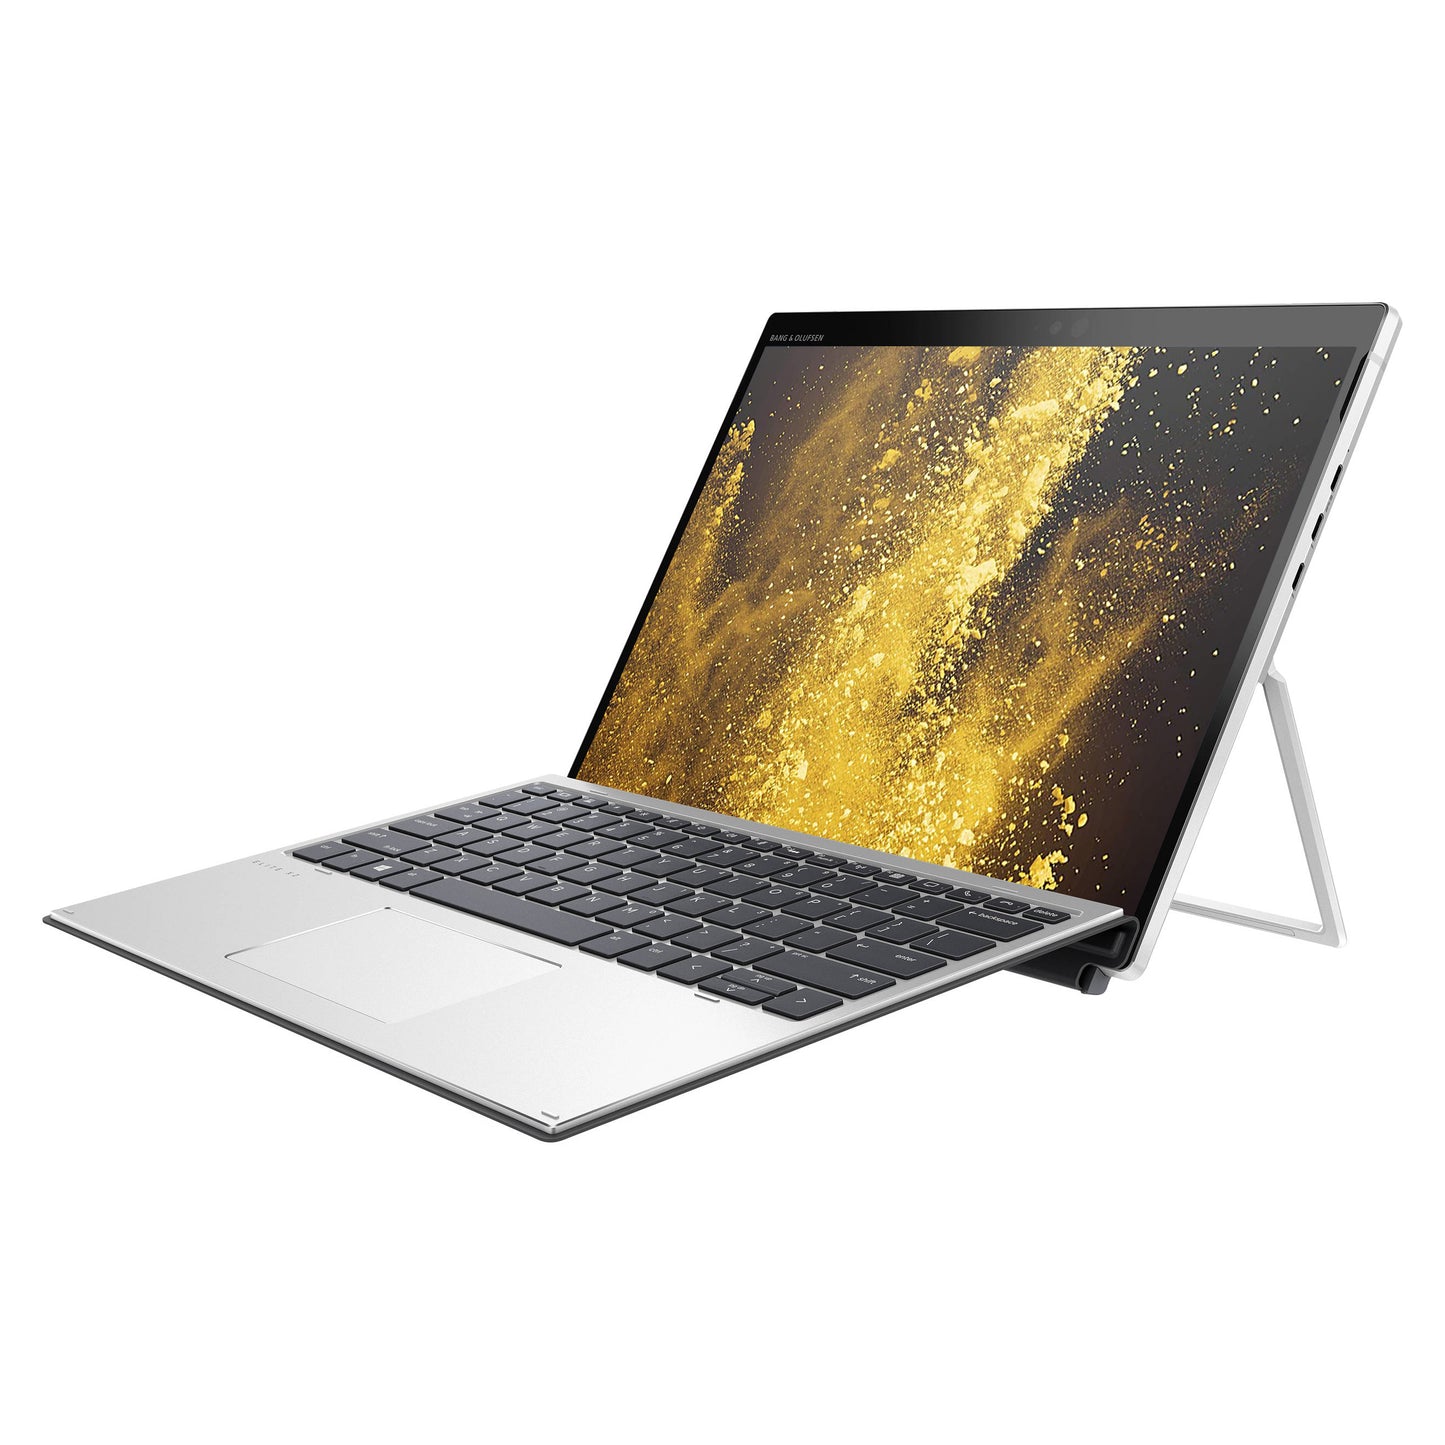 HP Elite X2 2in1 Core i5-8365u Touchscreen With Pen Detachable Laptop (Open Box)